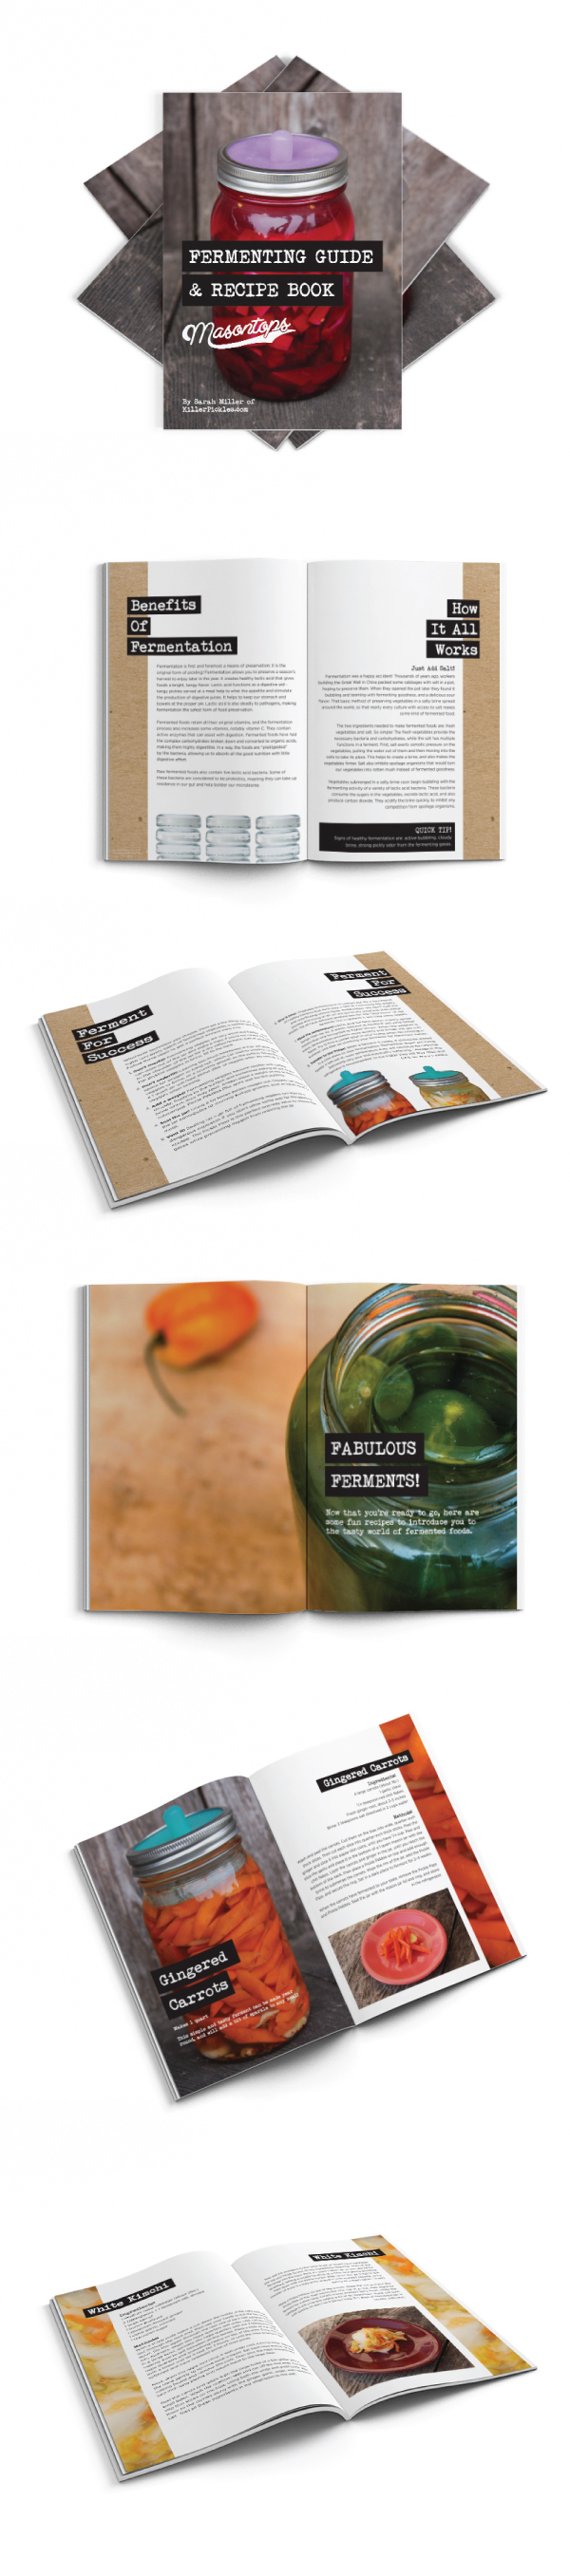 mason jar fermenting Guide recipe book how to